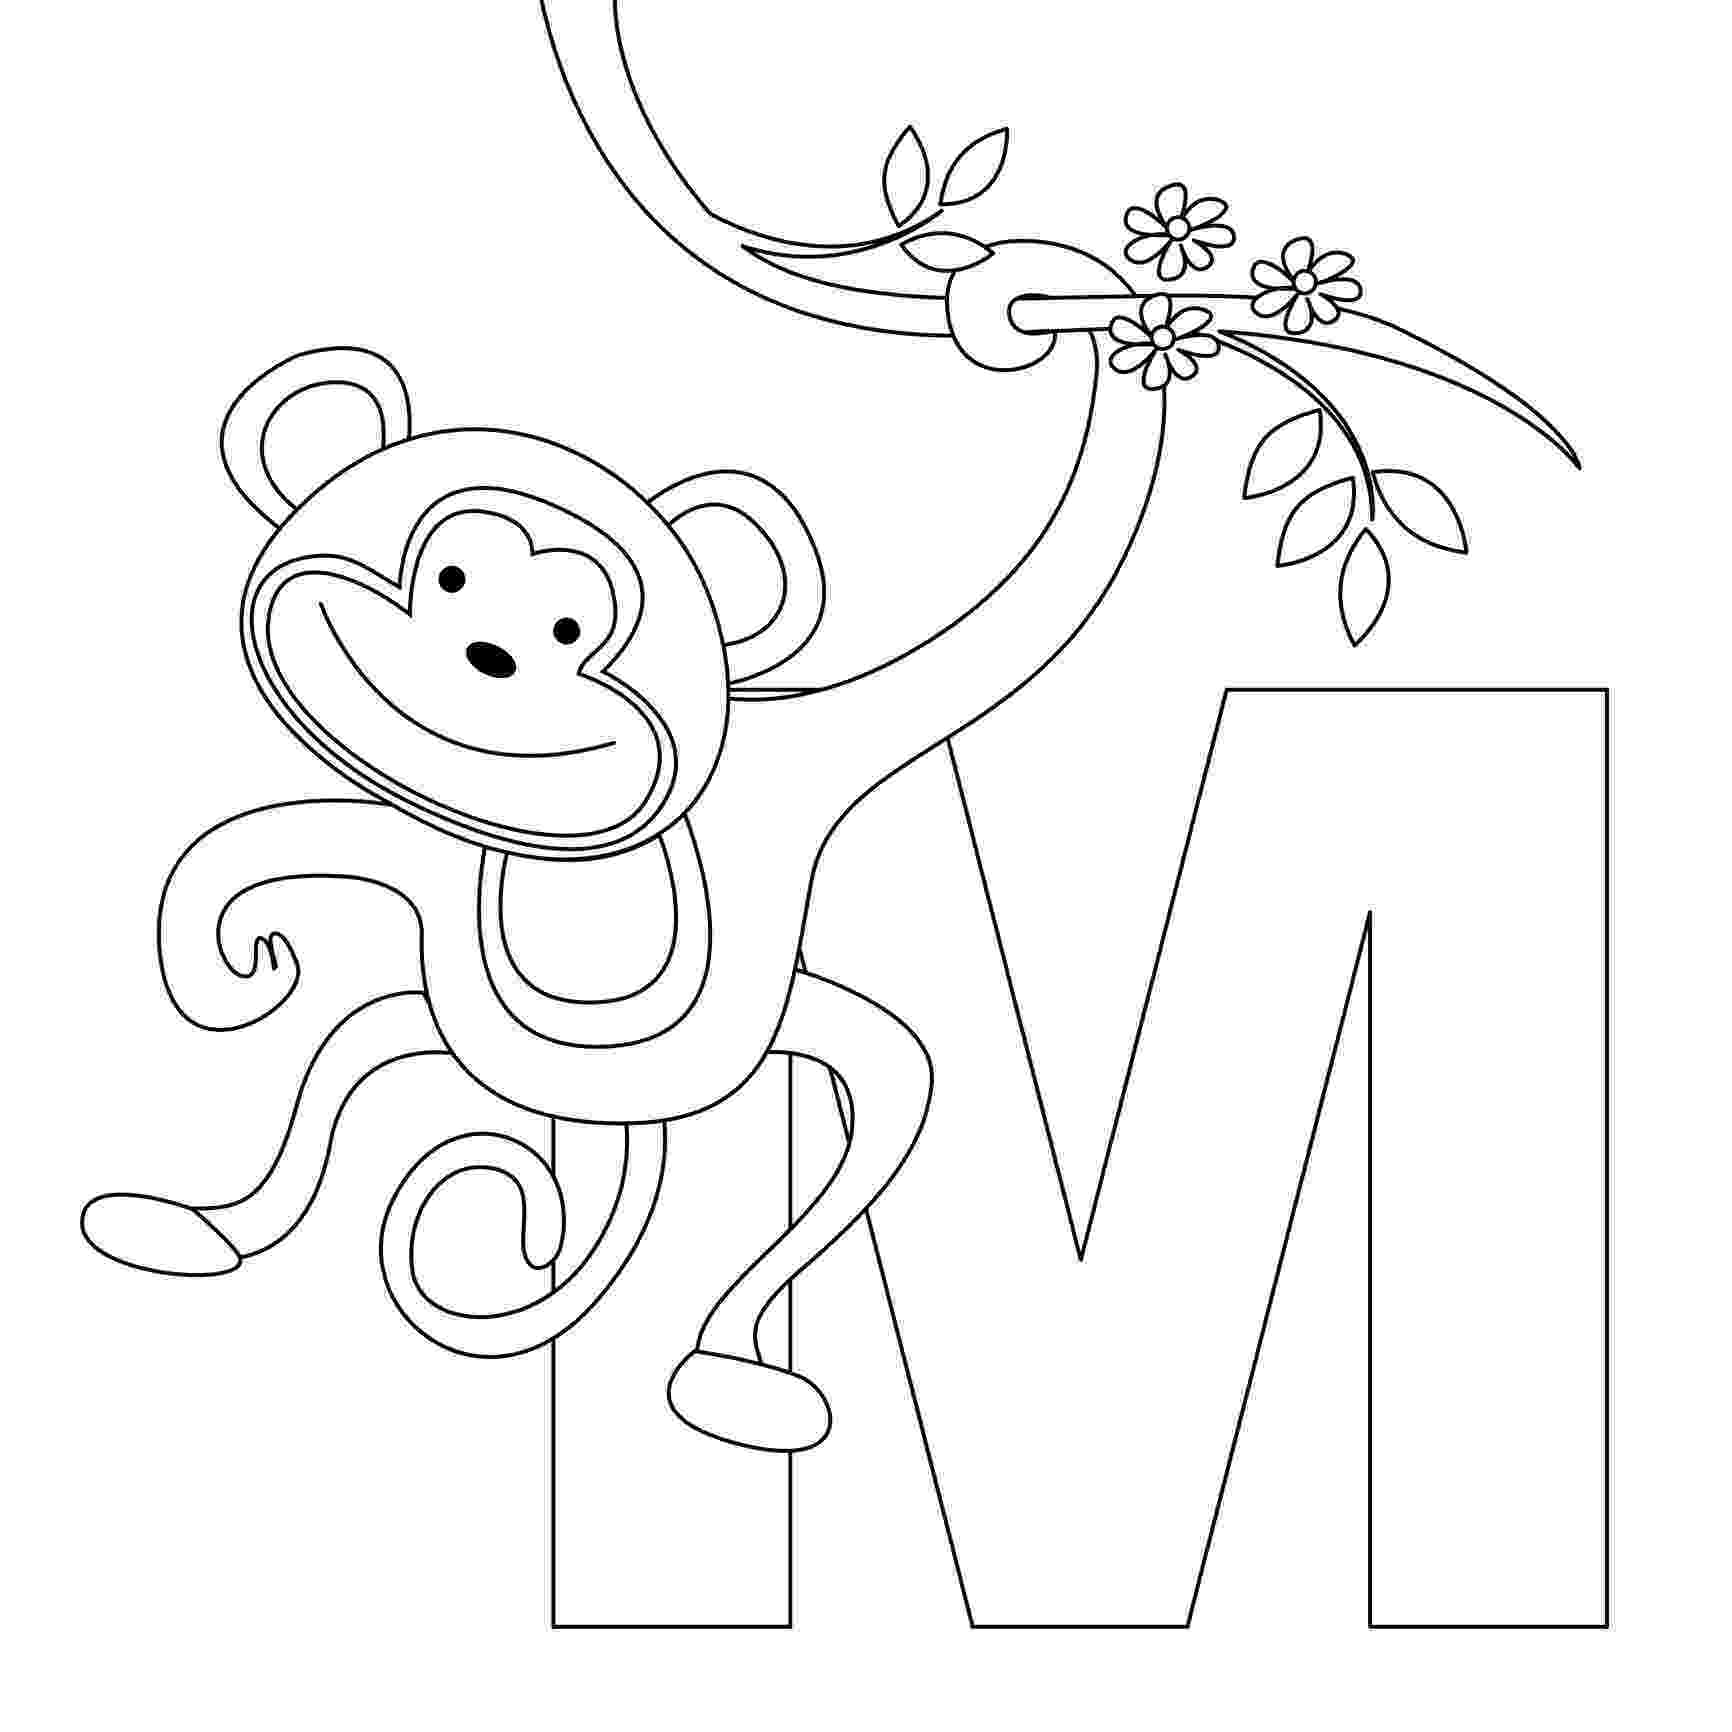 abc coloring sheets free printable alphabet coloring pages for kids best coloring abc sheets 